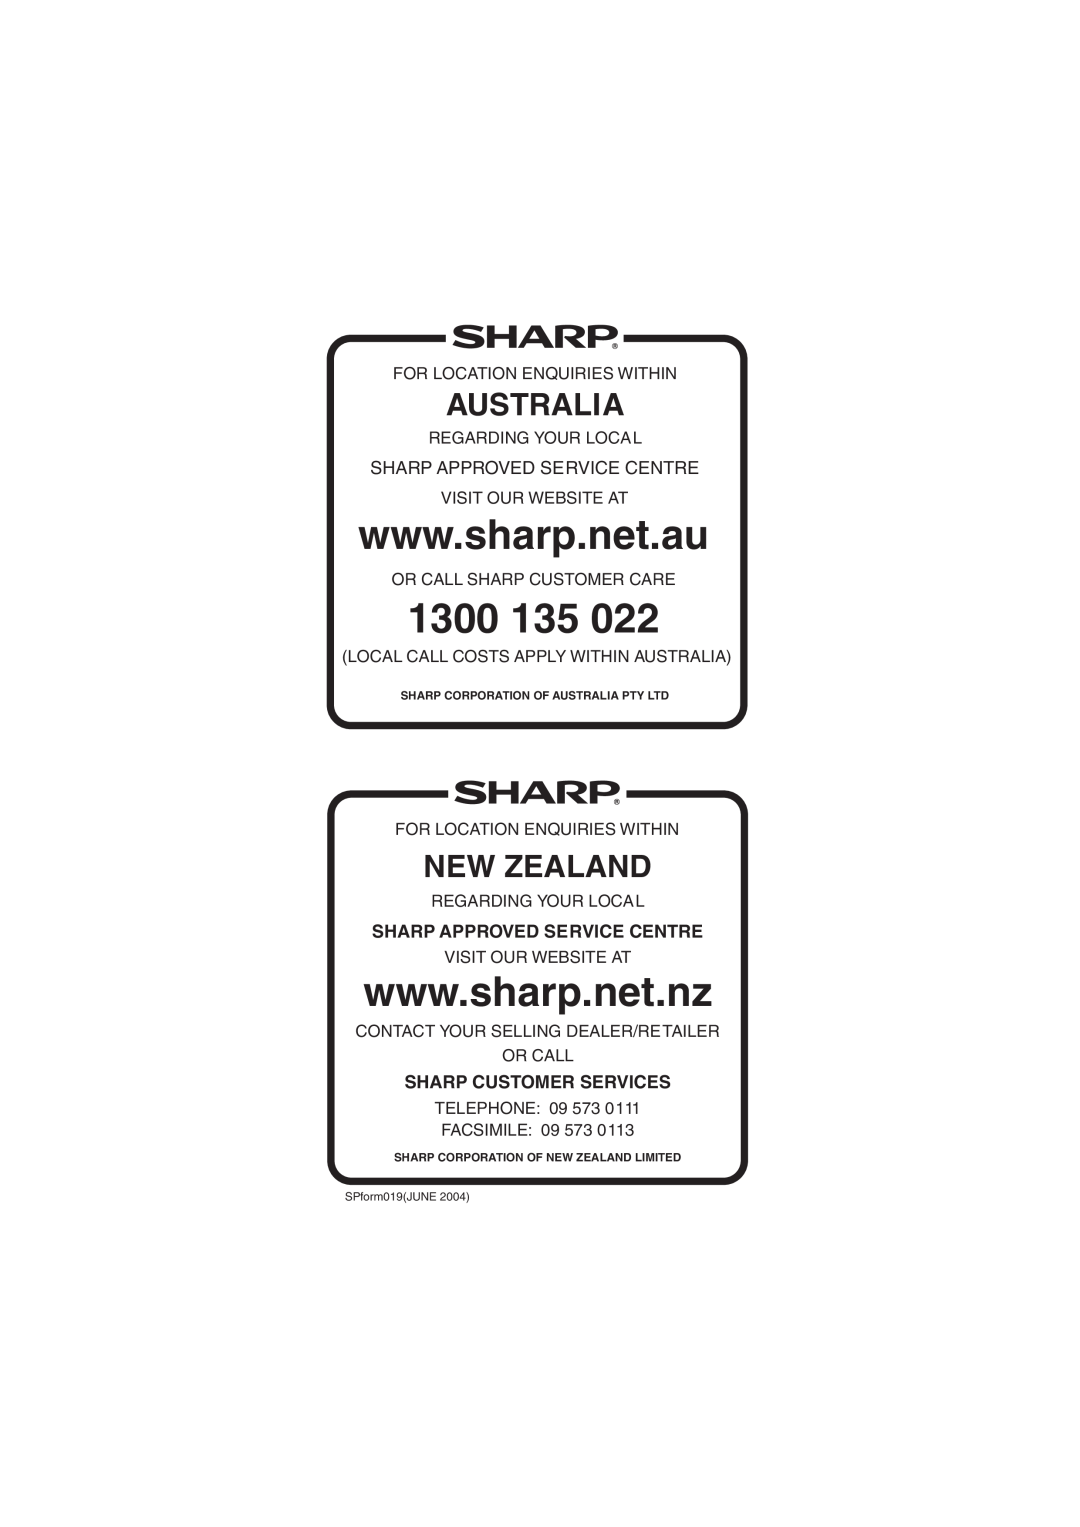 Sharp R-1900J operation manual 1300 135, Australia, New Zealand, Sharp Approved Service Centre, Sharp Customer Services 